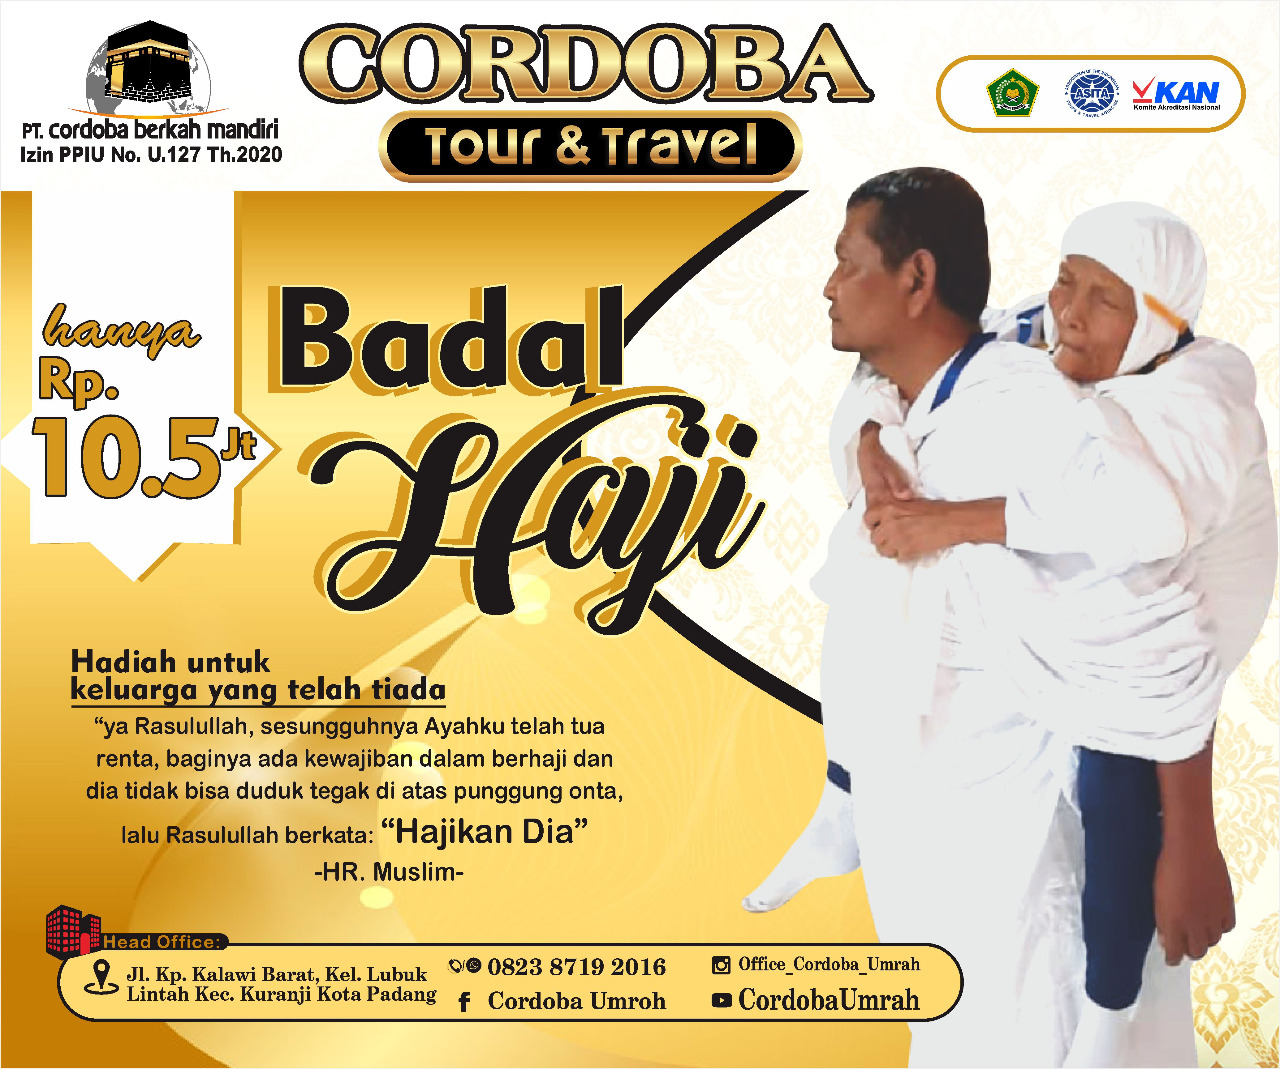 cordova travel haji